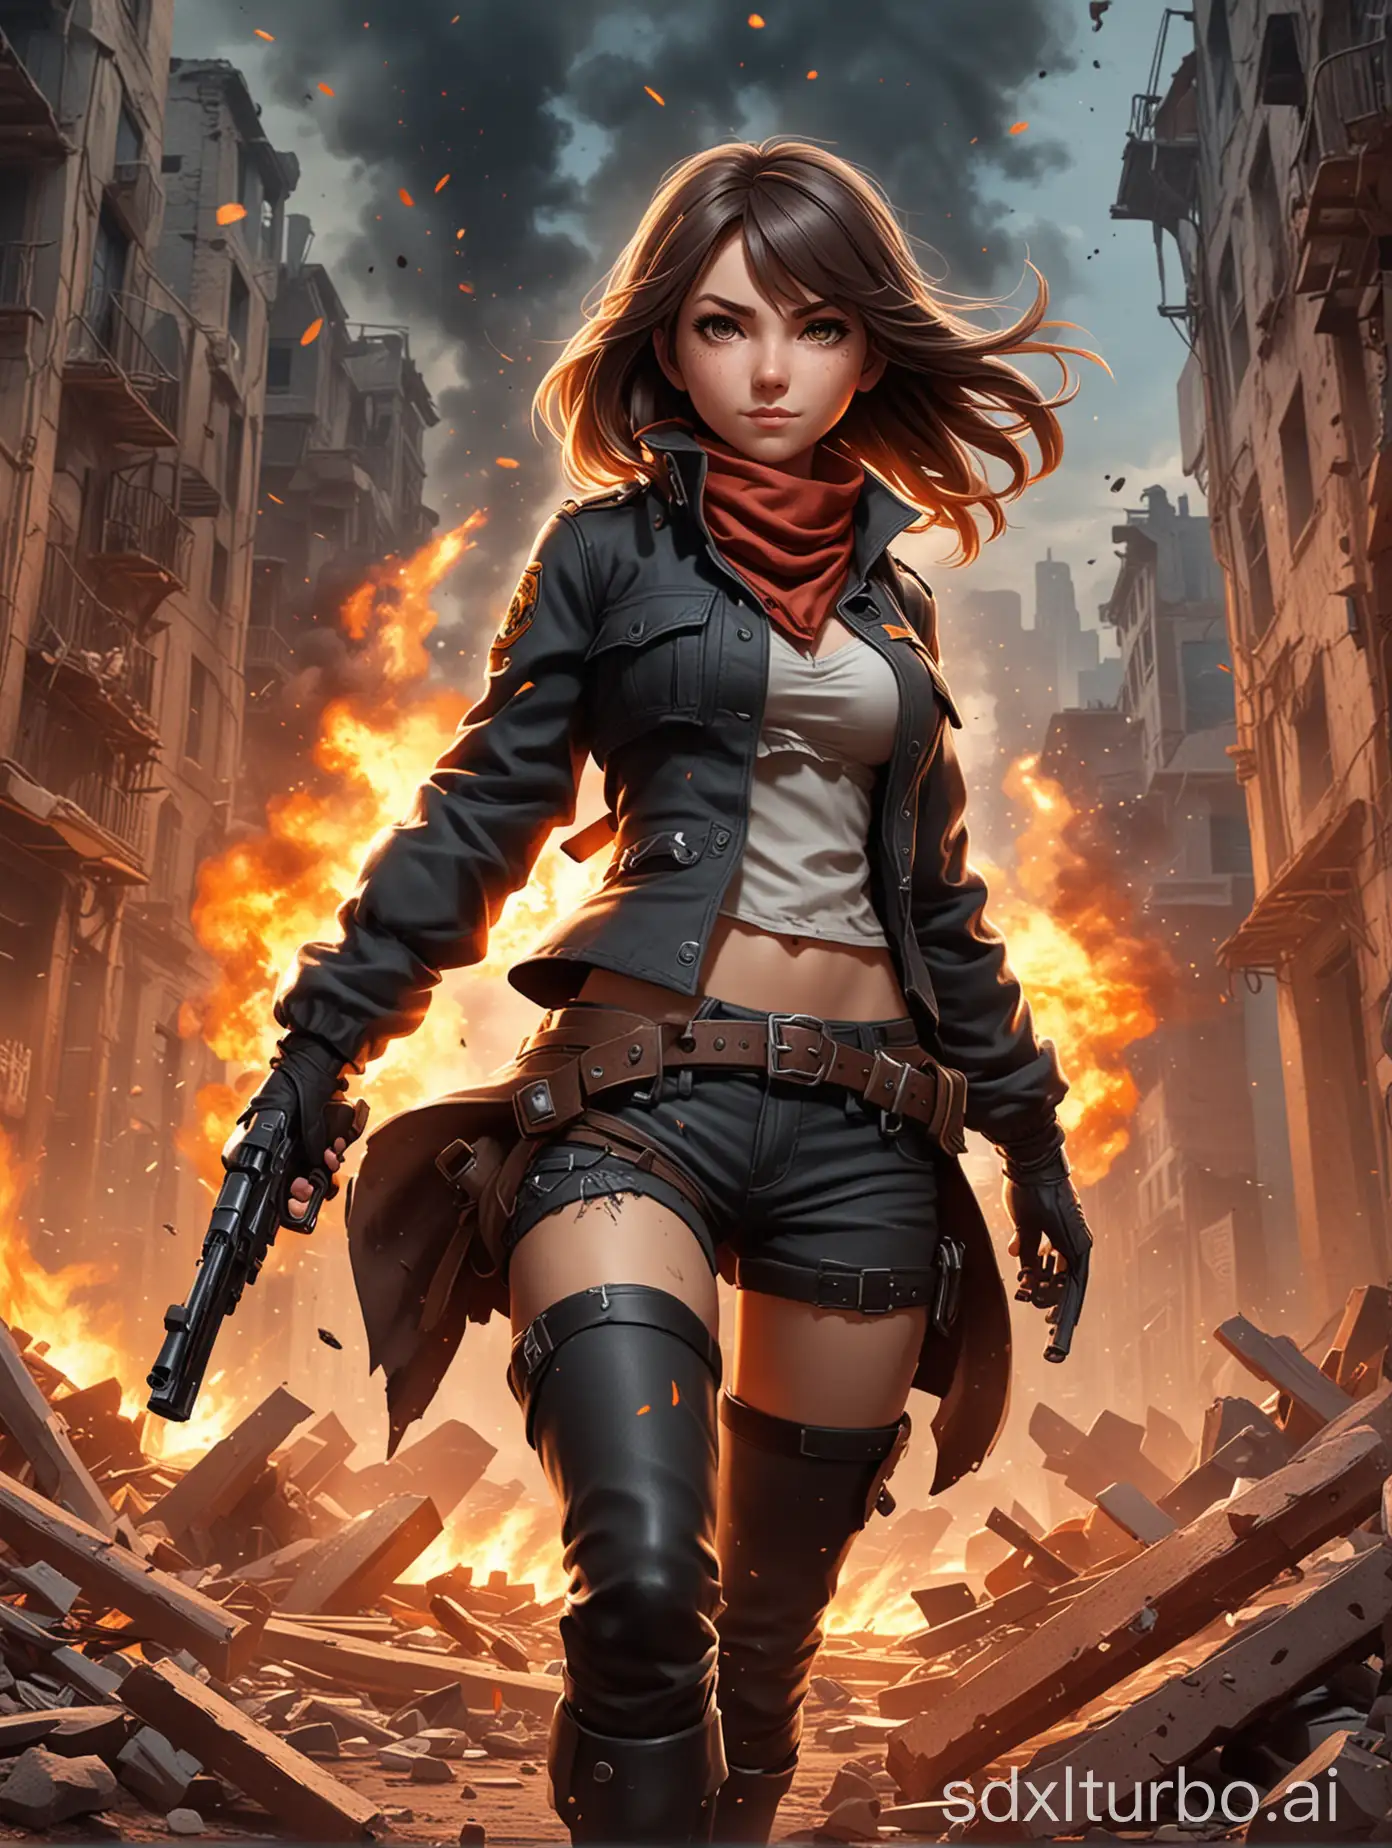 Dynamic-Anime-Gunslinger-in-Fiery-Battle-Action-Poster